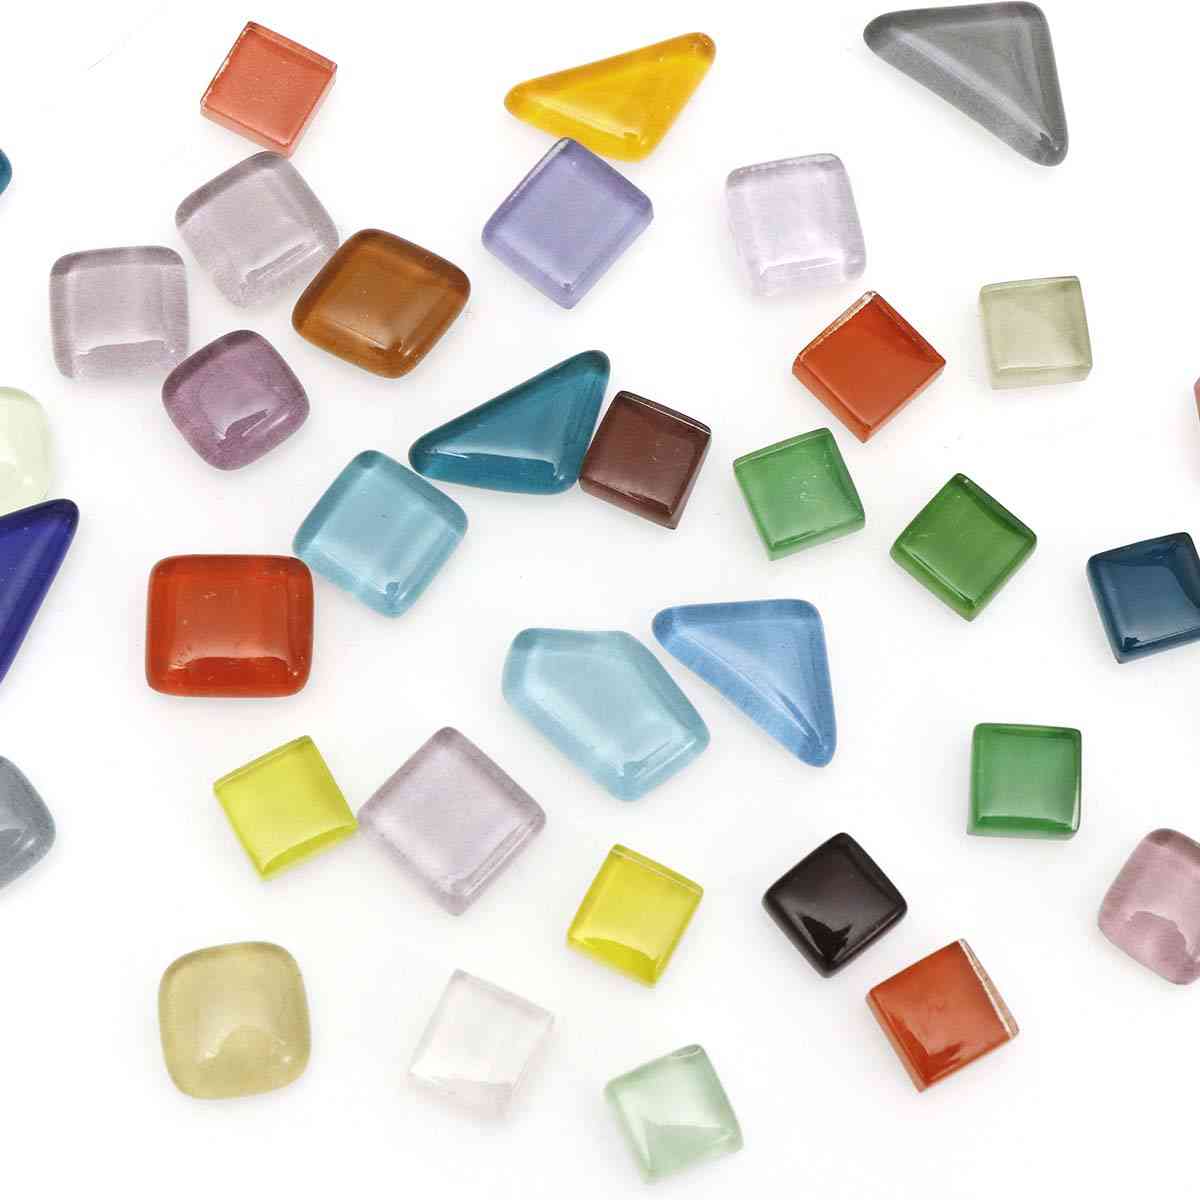 Figuras geométricas em mini ladrilhos de mosaico de cristal